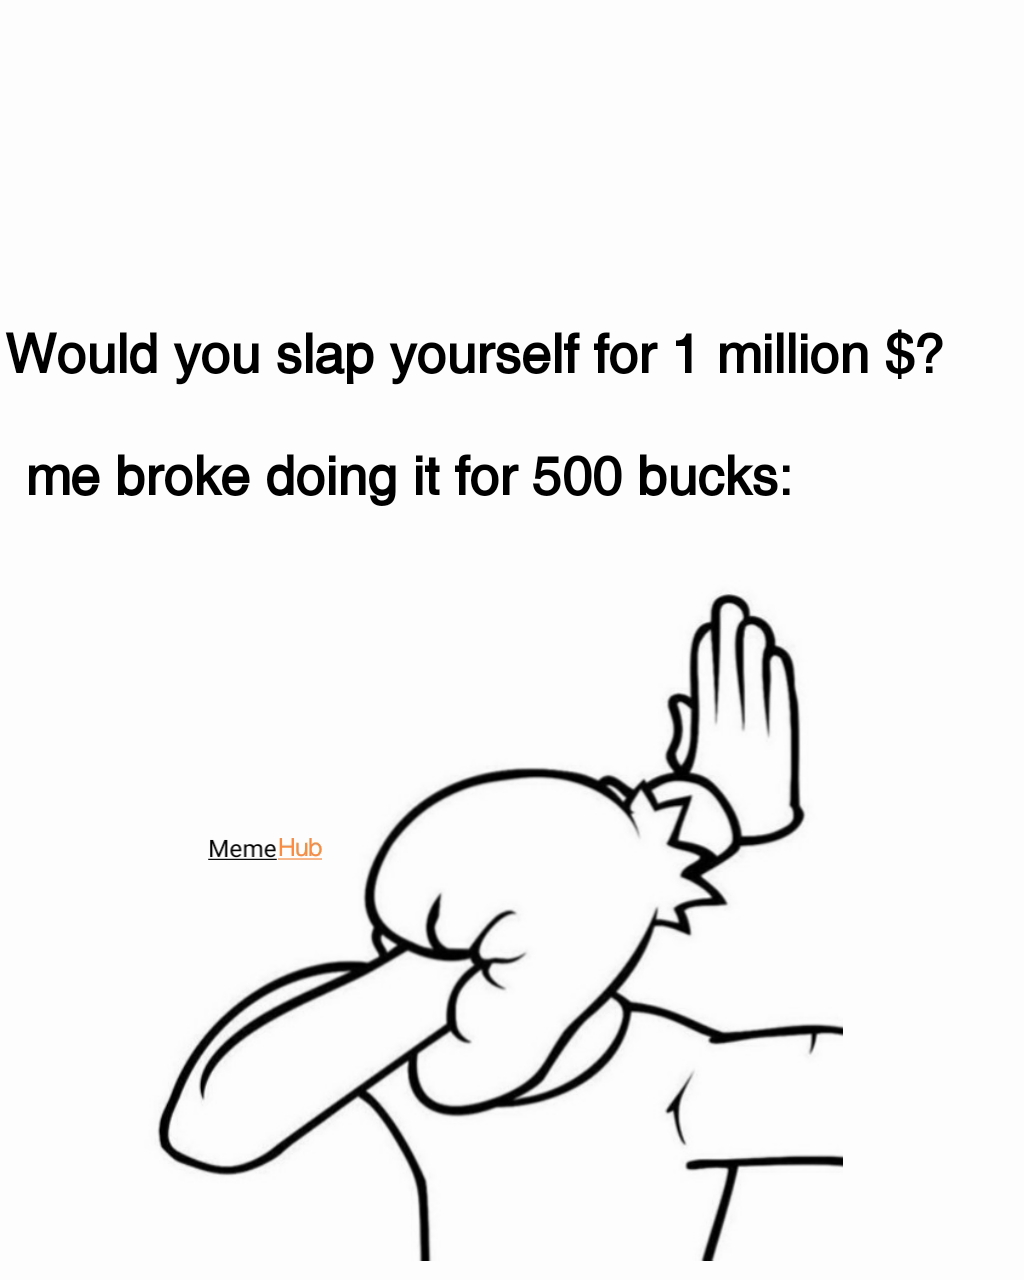 Would you slap yourself for 1 million $? Meme me broke doing it for 500 bucks: Hub